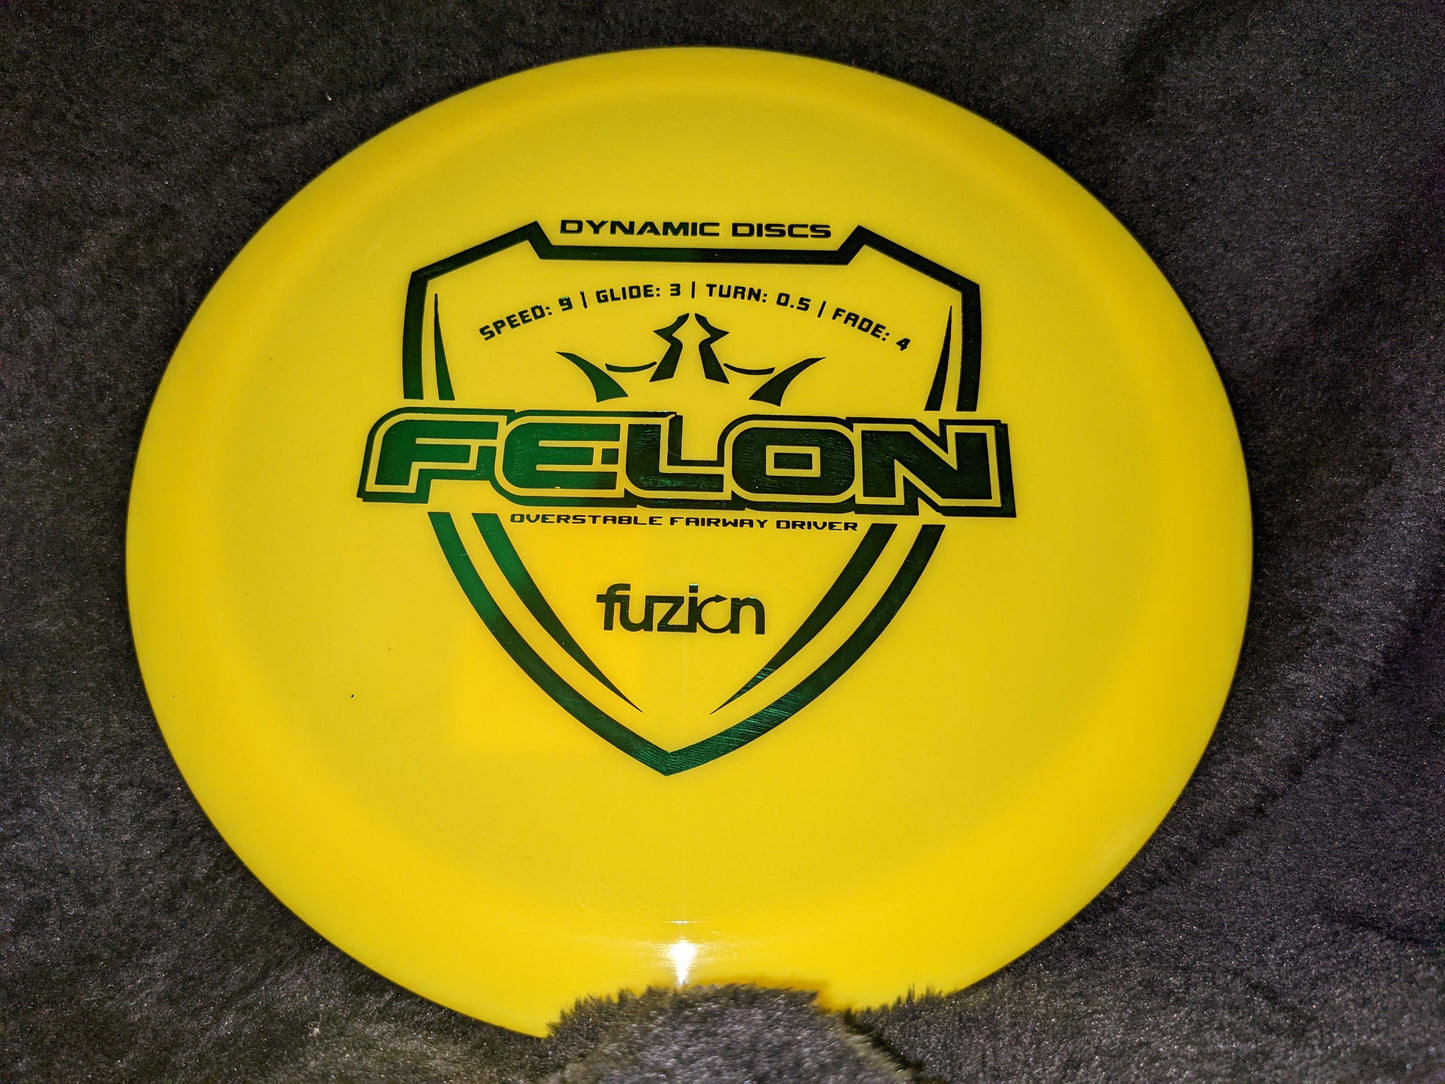 Dynamic Discs Fuzion Felon 171 g New Driver Yellow